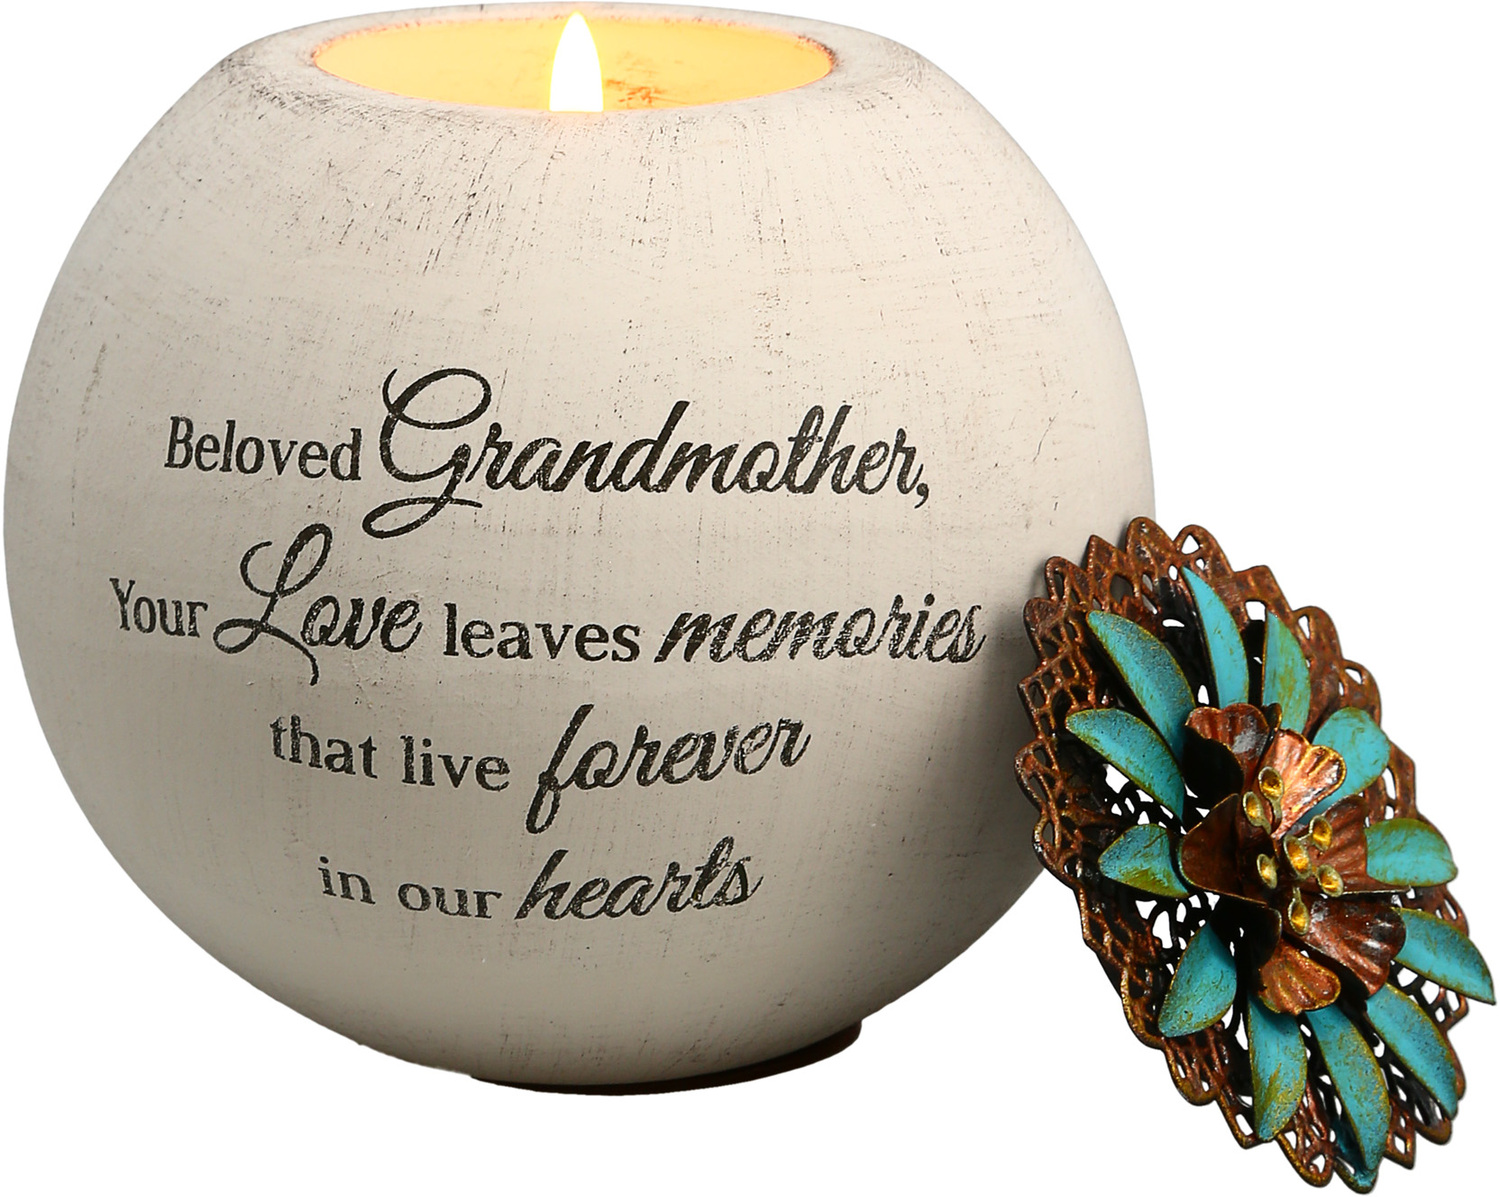 Beloved Grandmother by Light Your Way Memorial - Beloved Grandmother - 4" Round Tealight Candle Holder